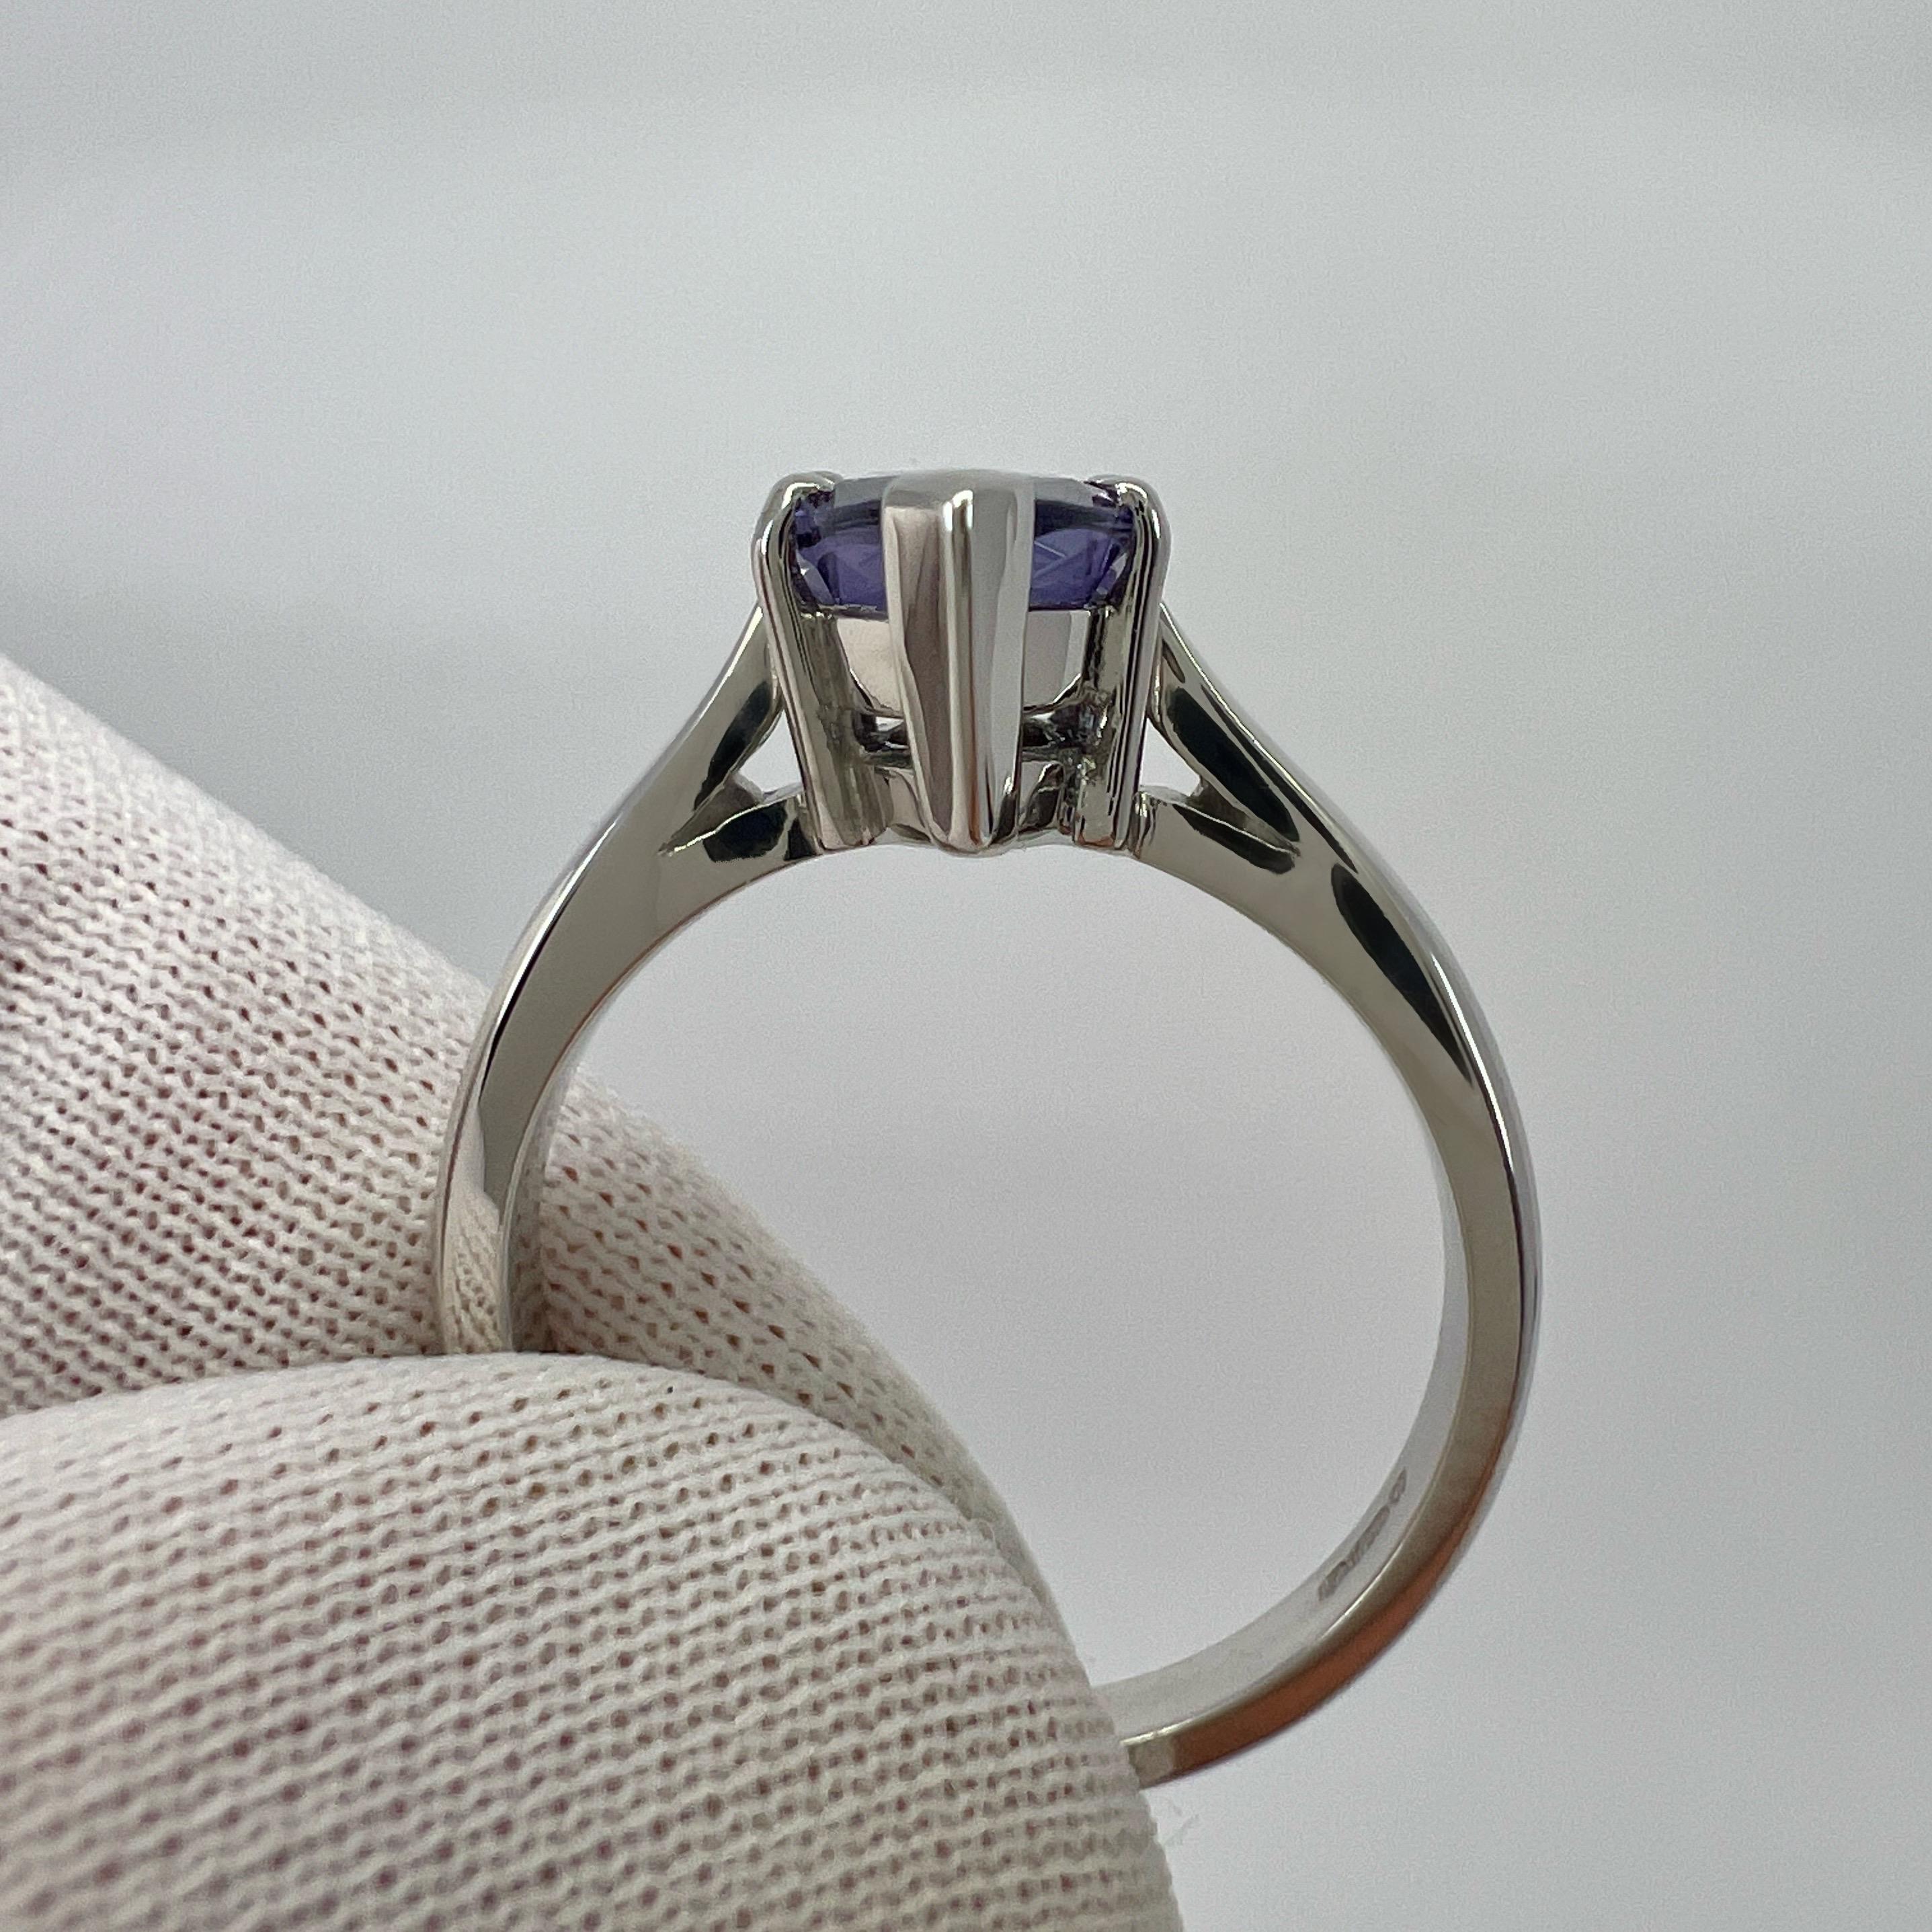 Unique 2.13ct Vivid Purple Violet Spinel Marquise 18k White Gold Solitaire Ring For Sale 2